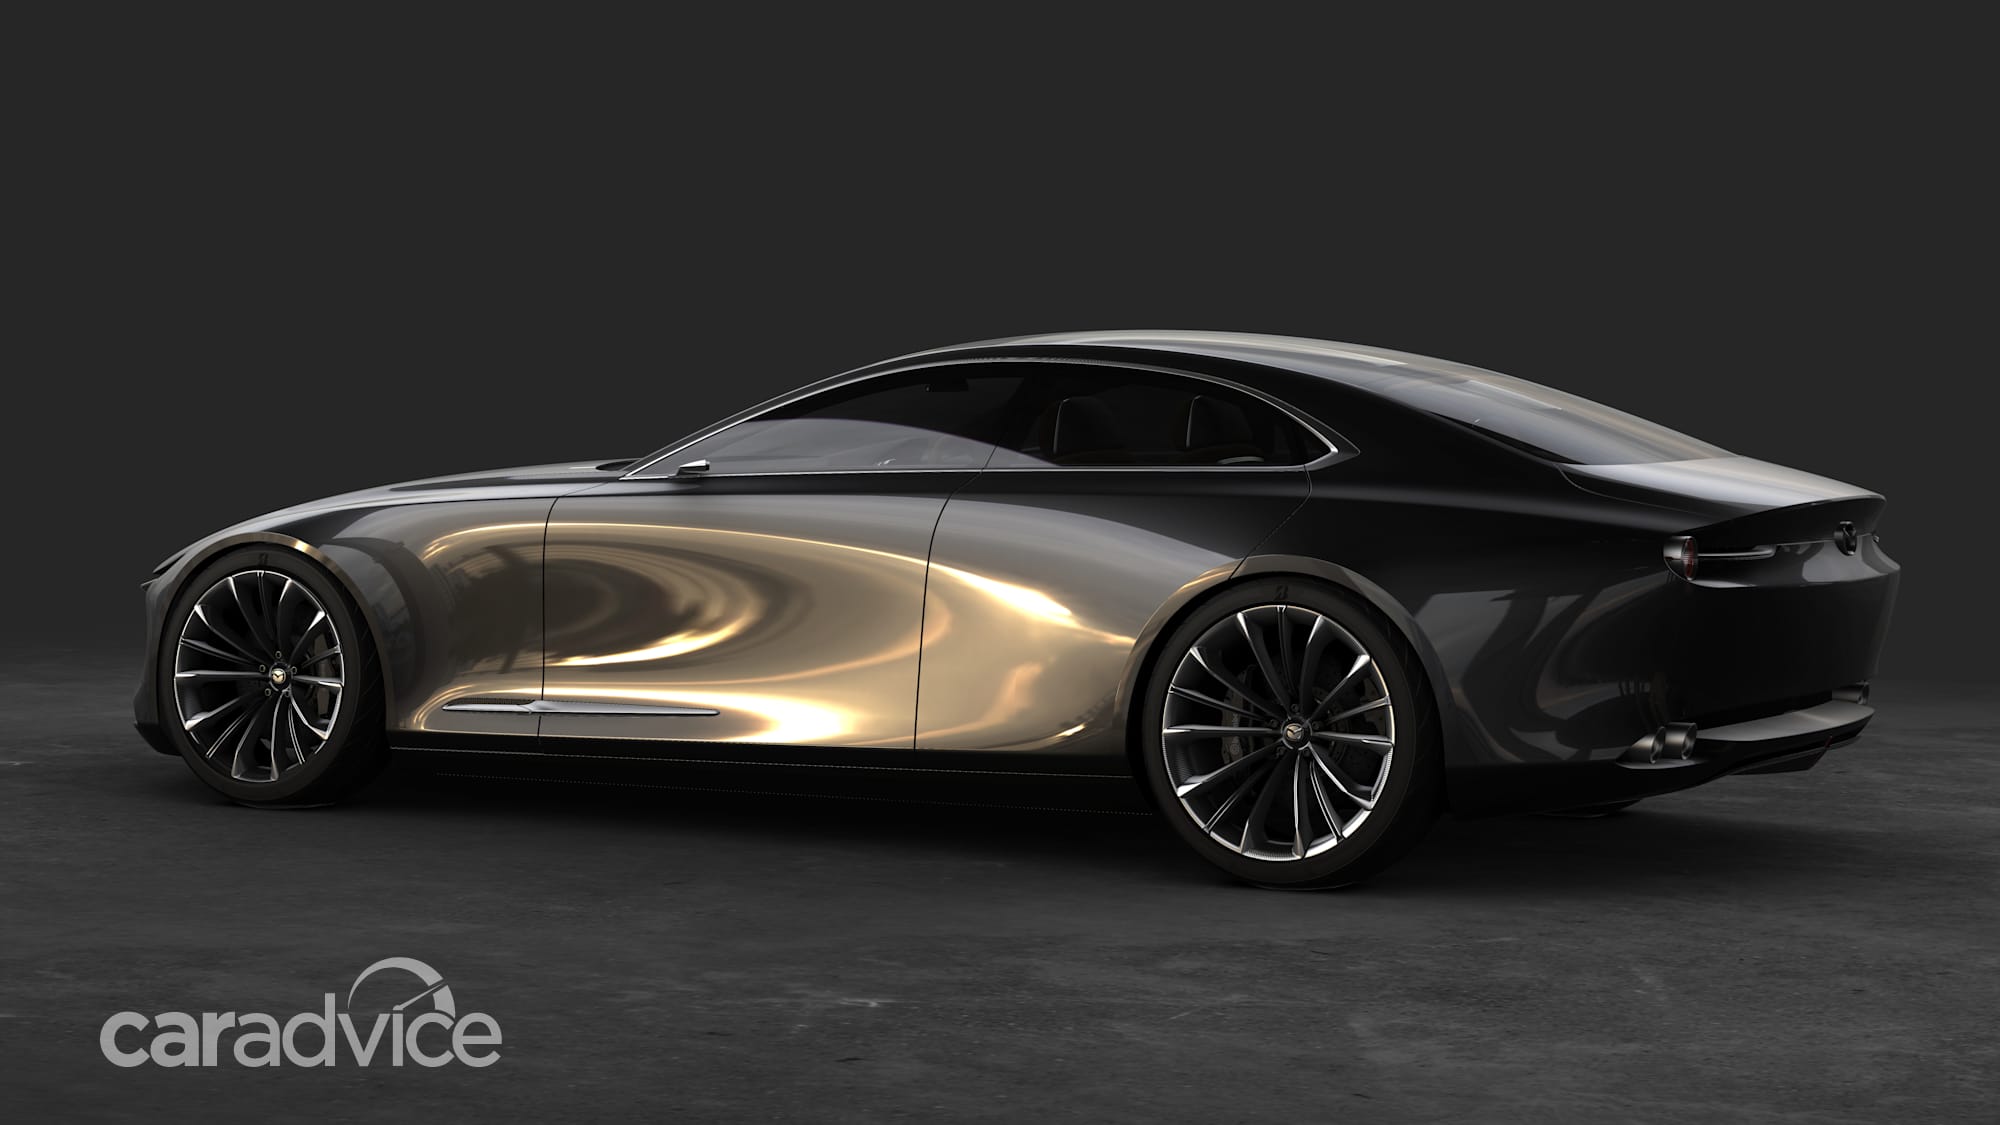 Mazda Vision Coupe concept showcases nextgeneration design language